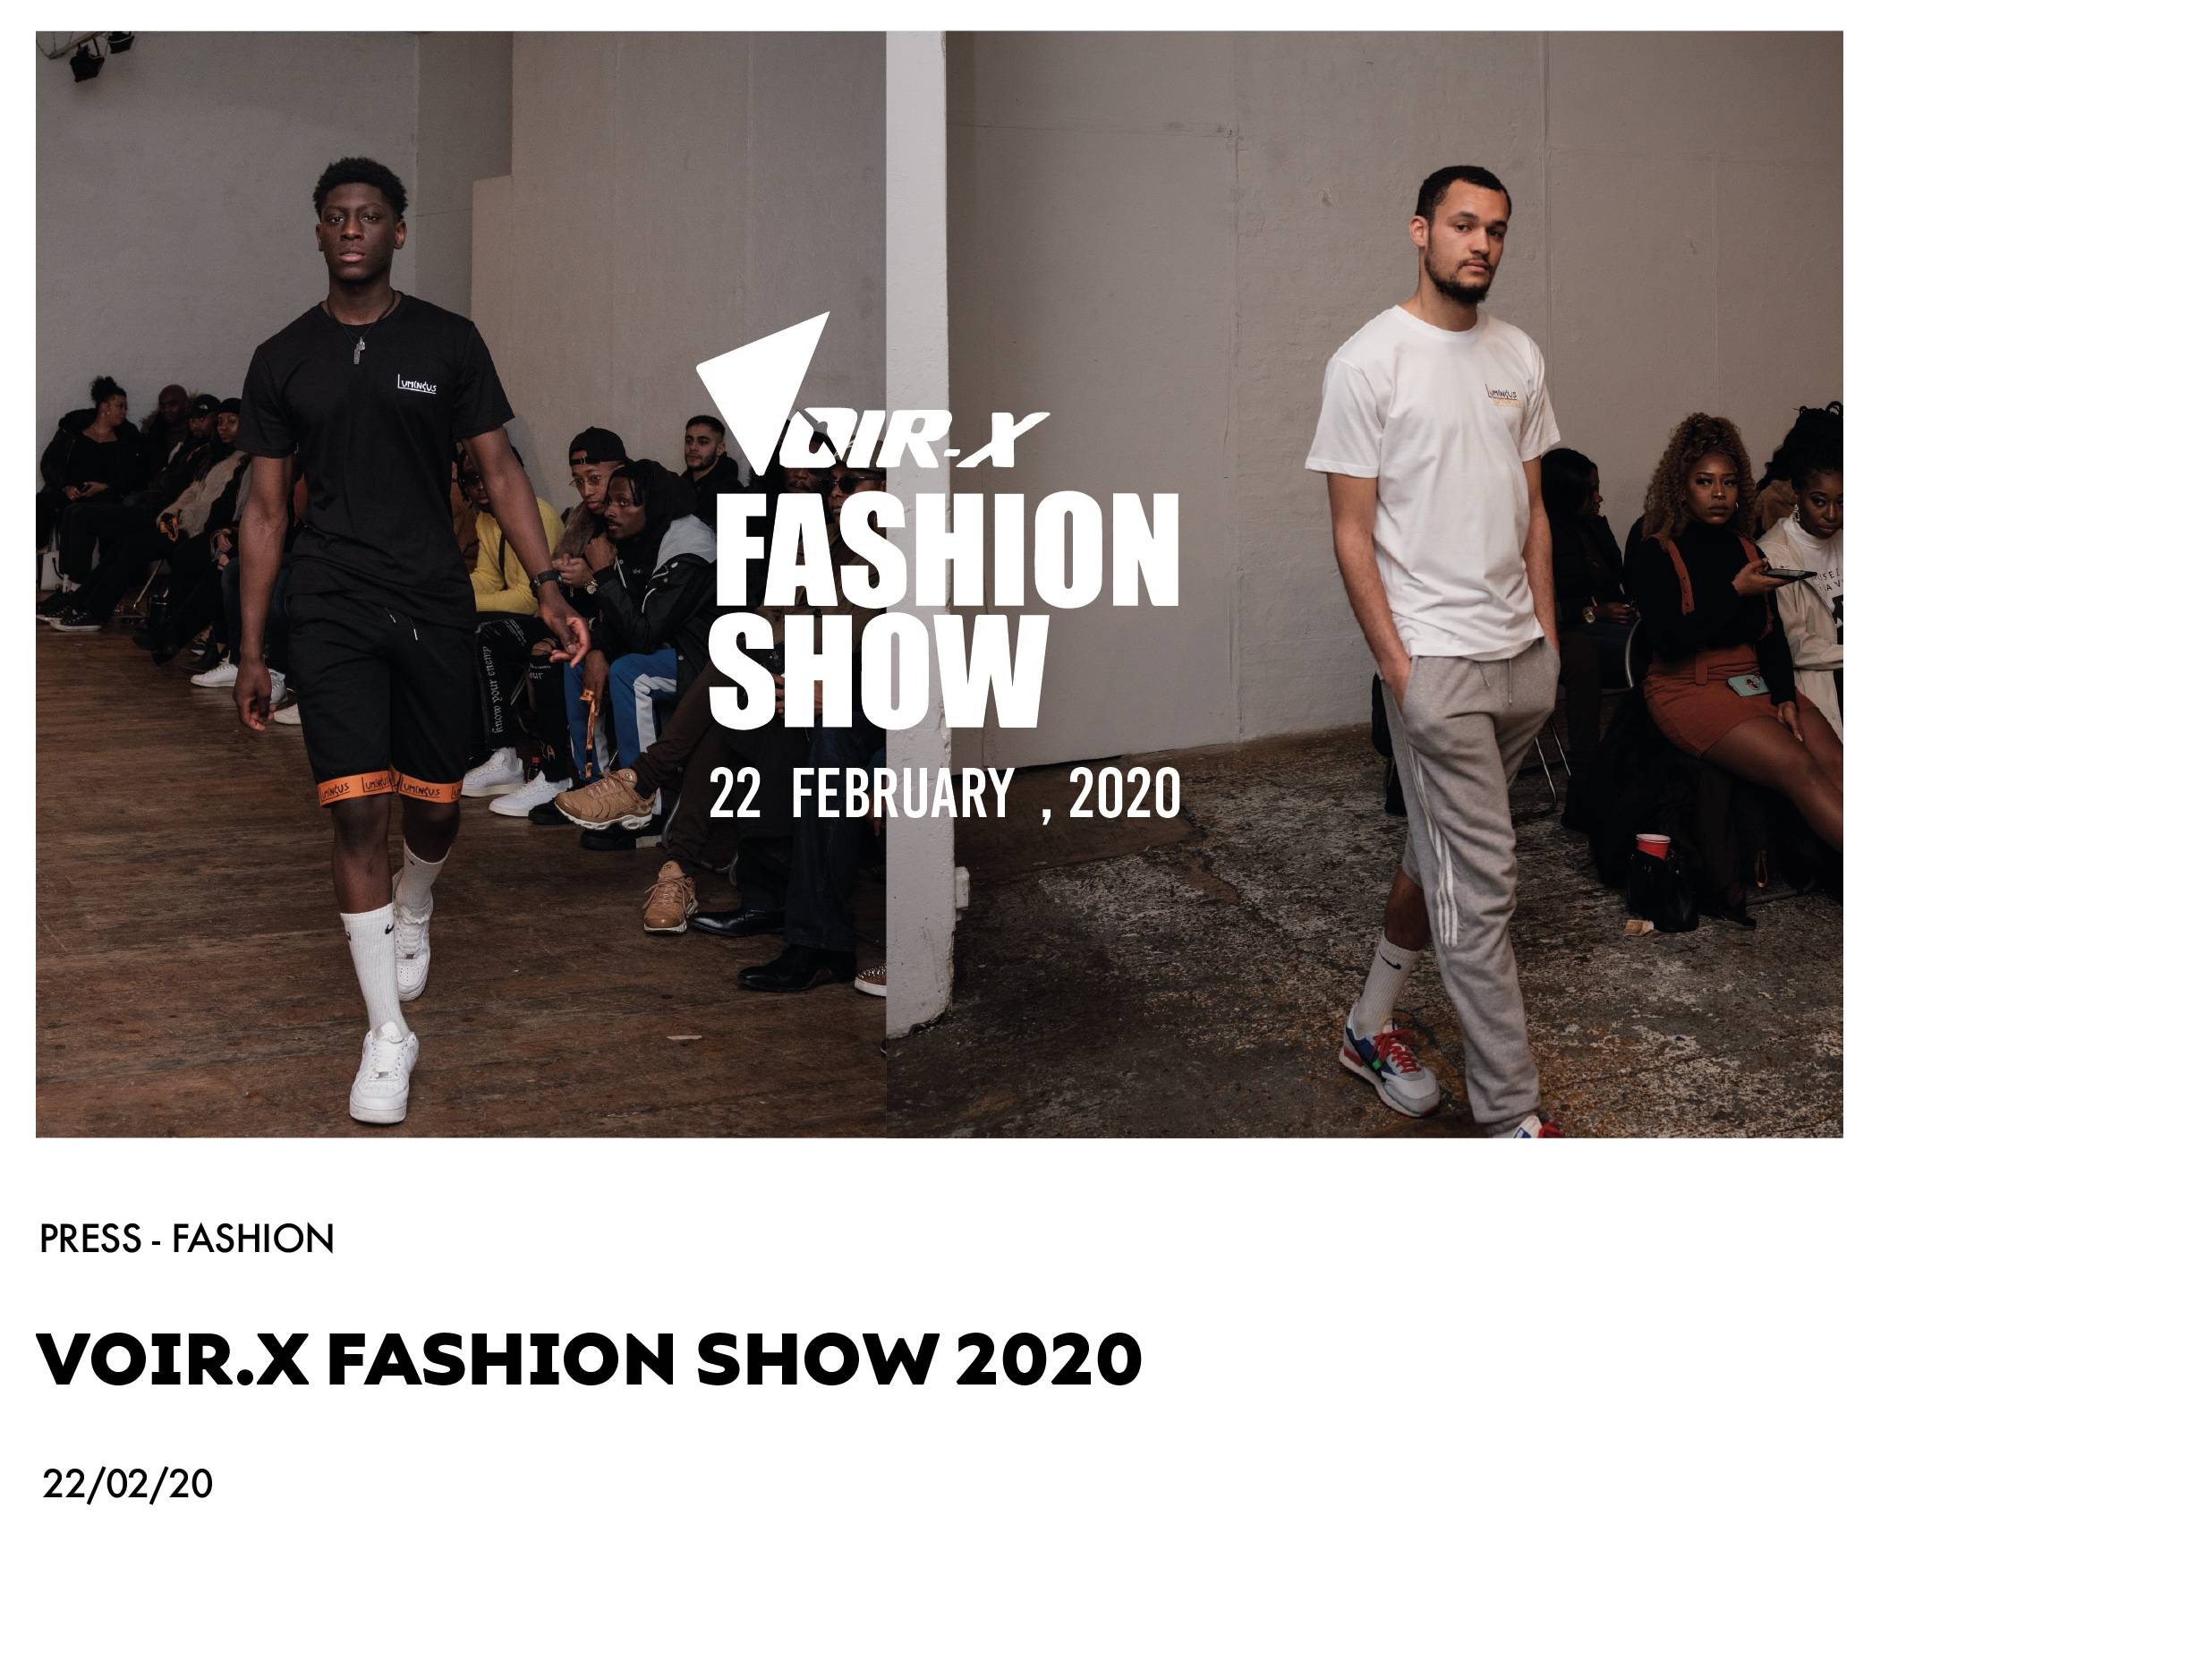 Voir.X Fashion Show 2020